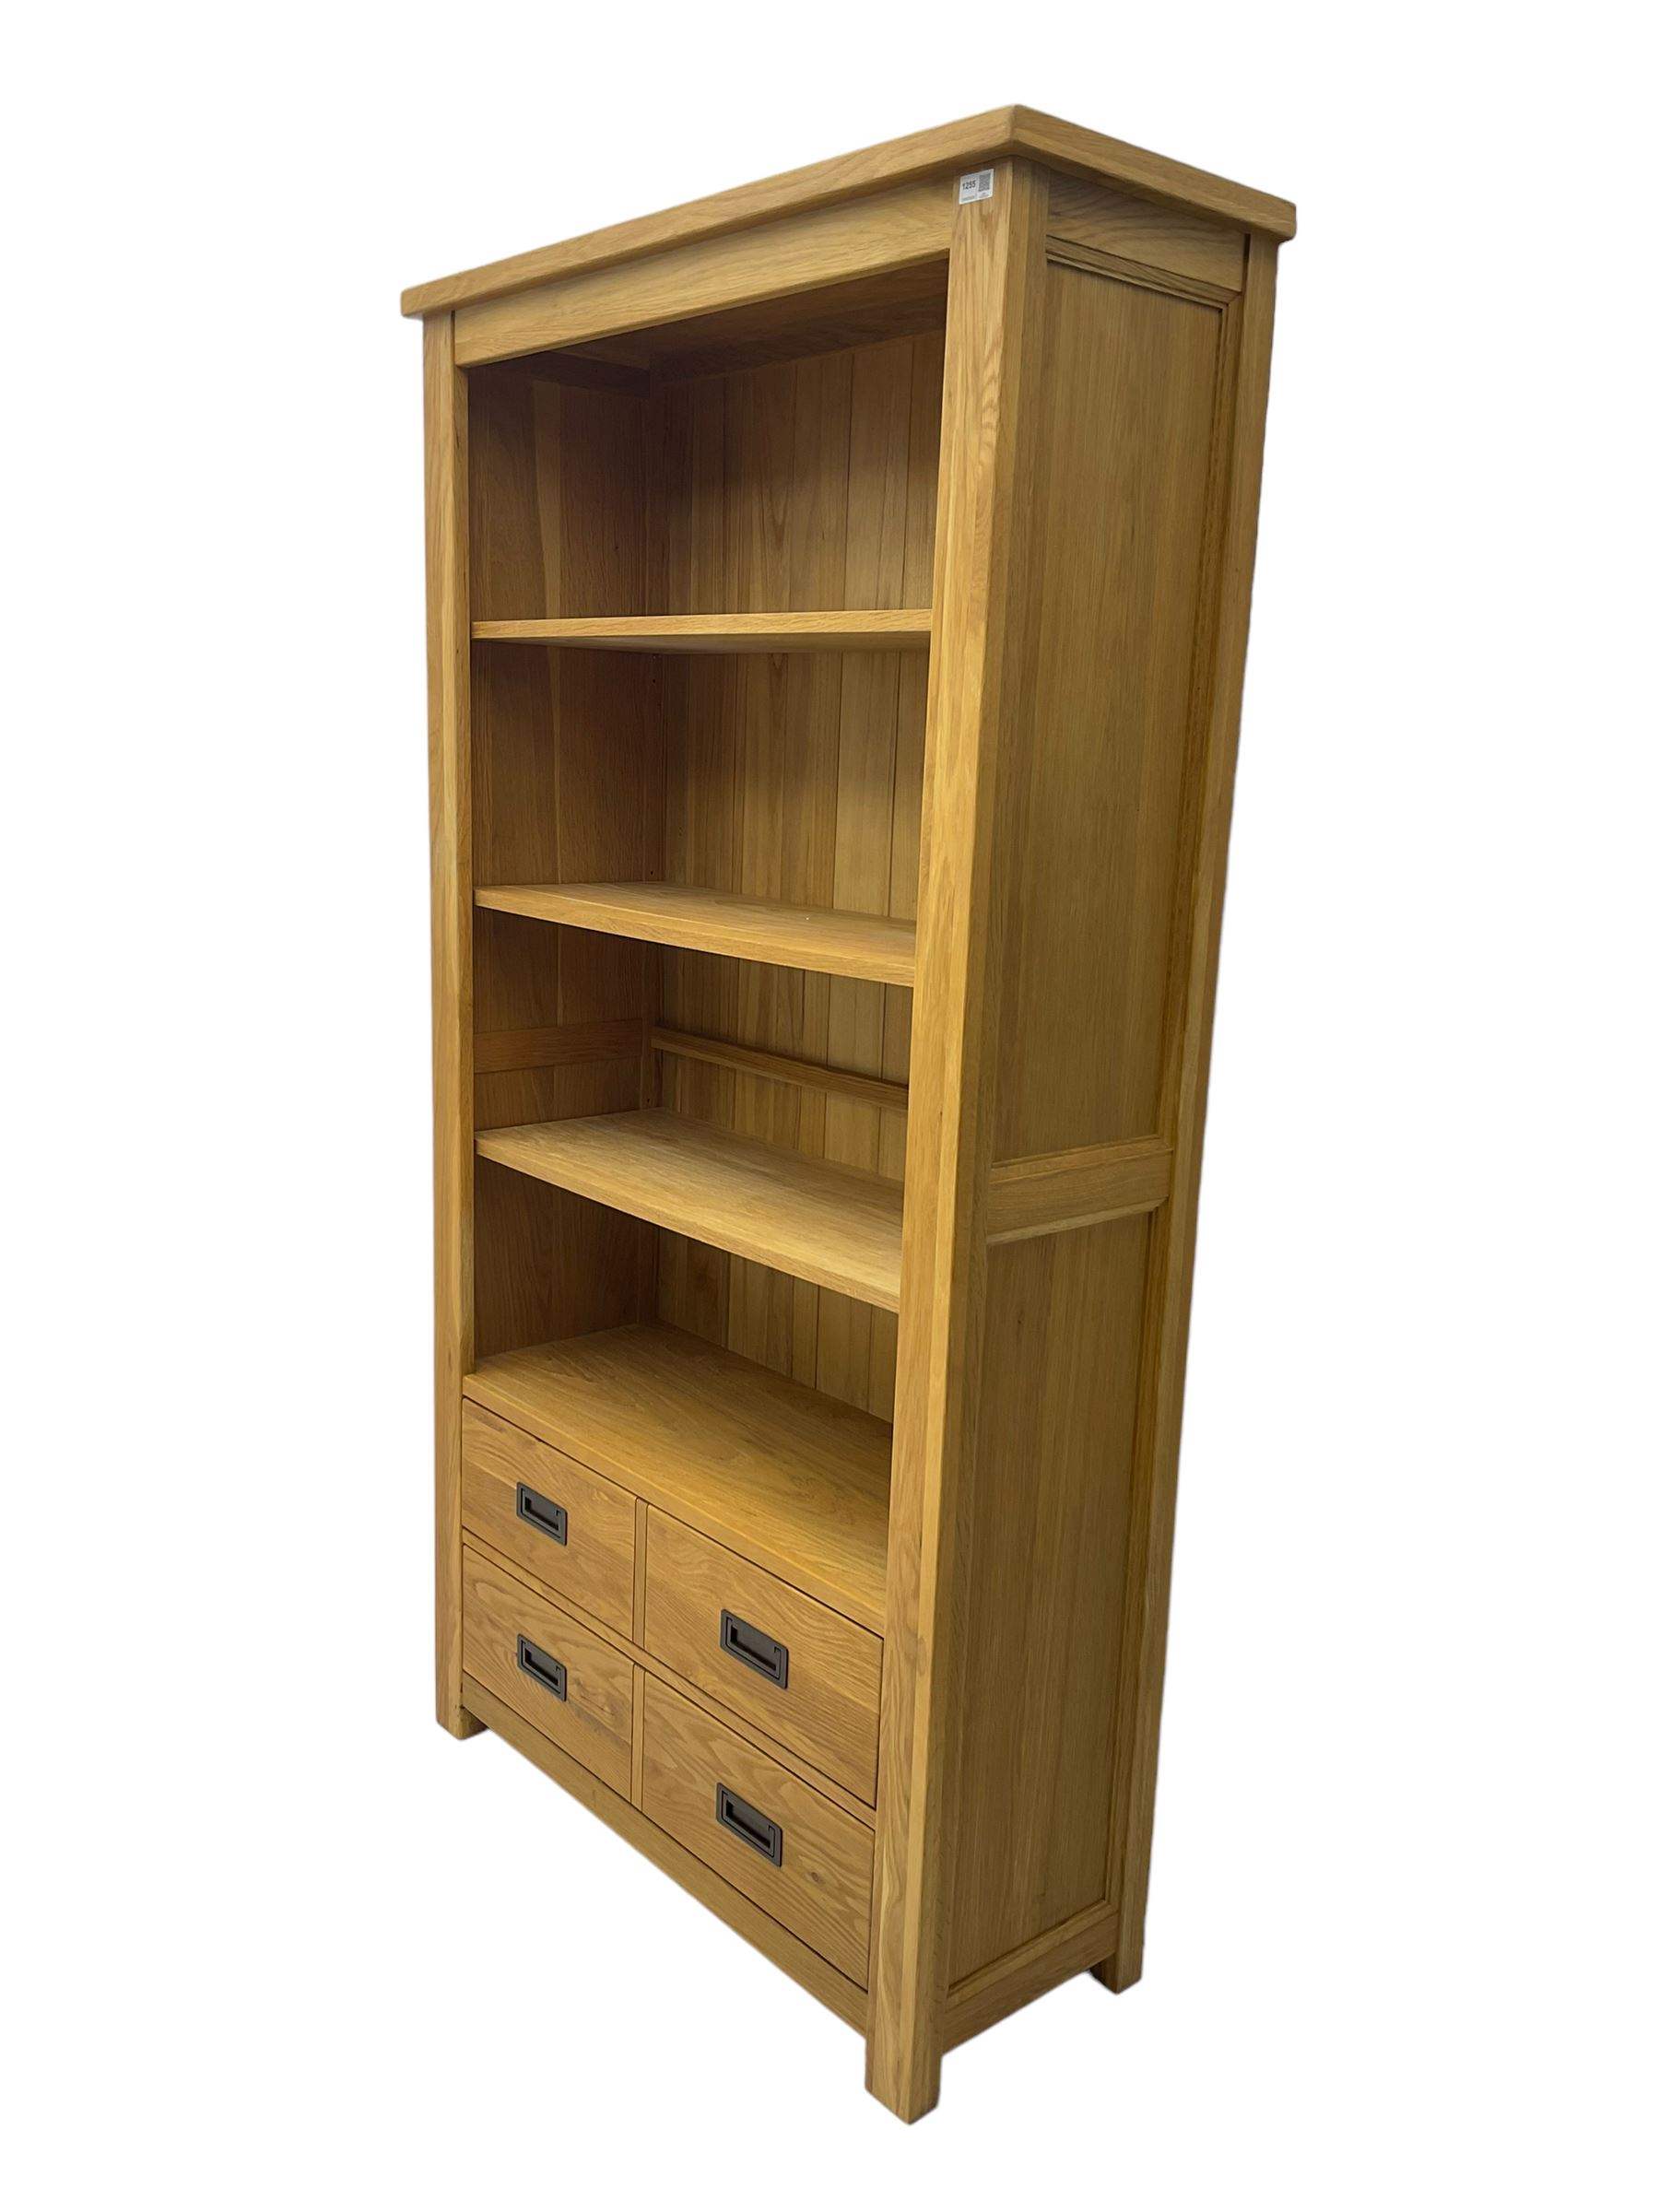 'Galloway' oak open wide bookcase - Image 6 of 7